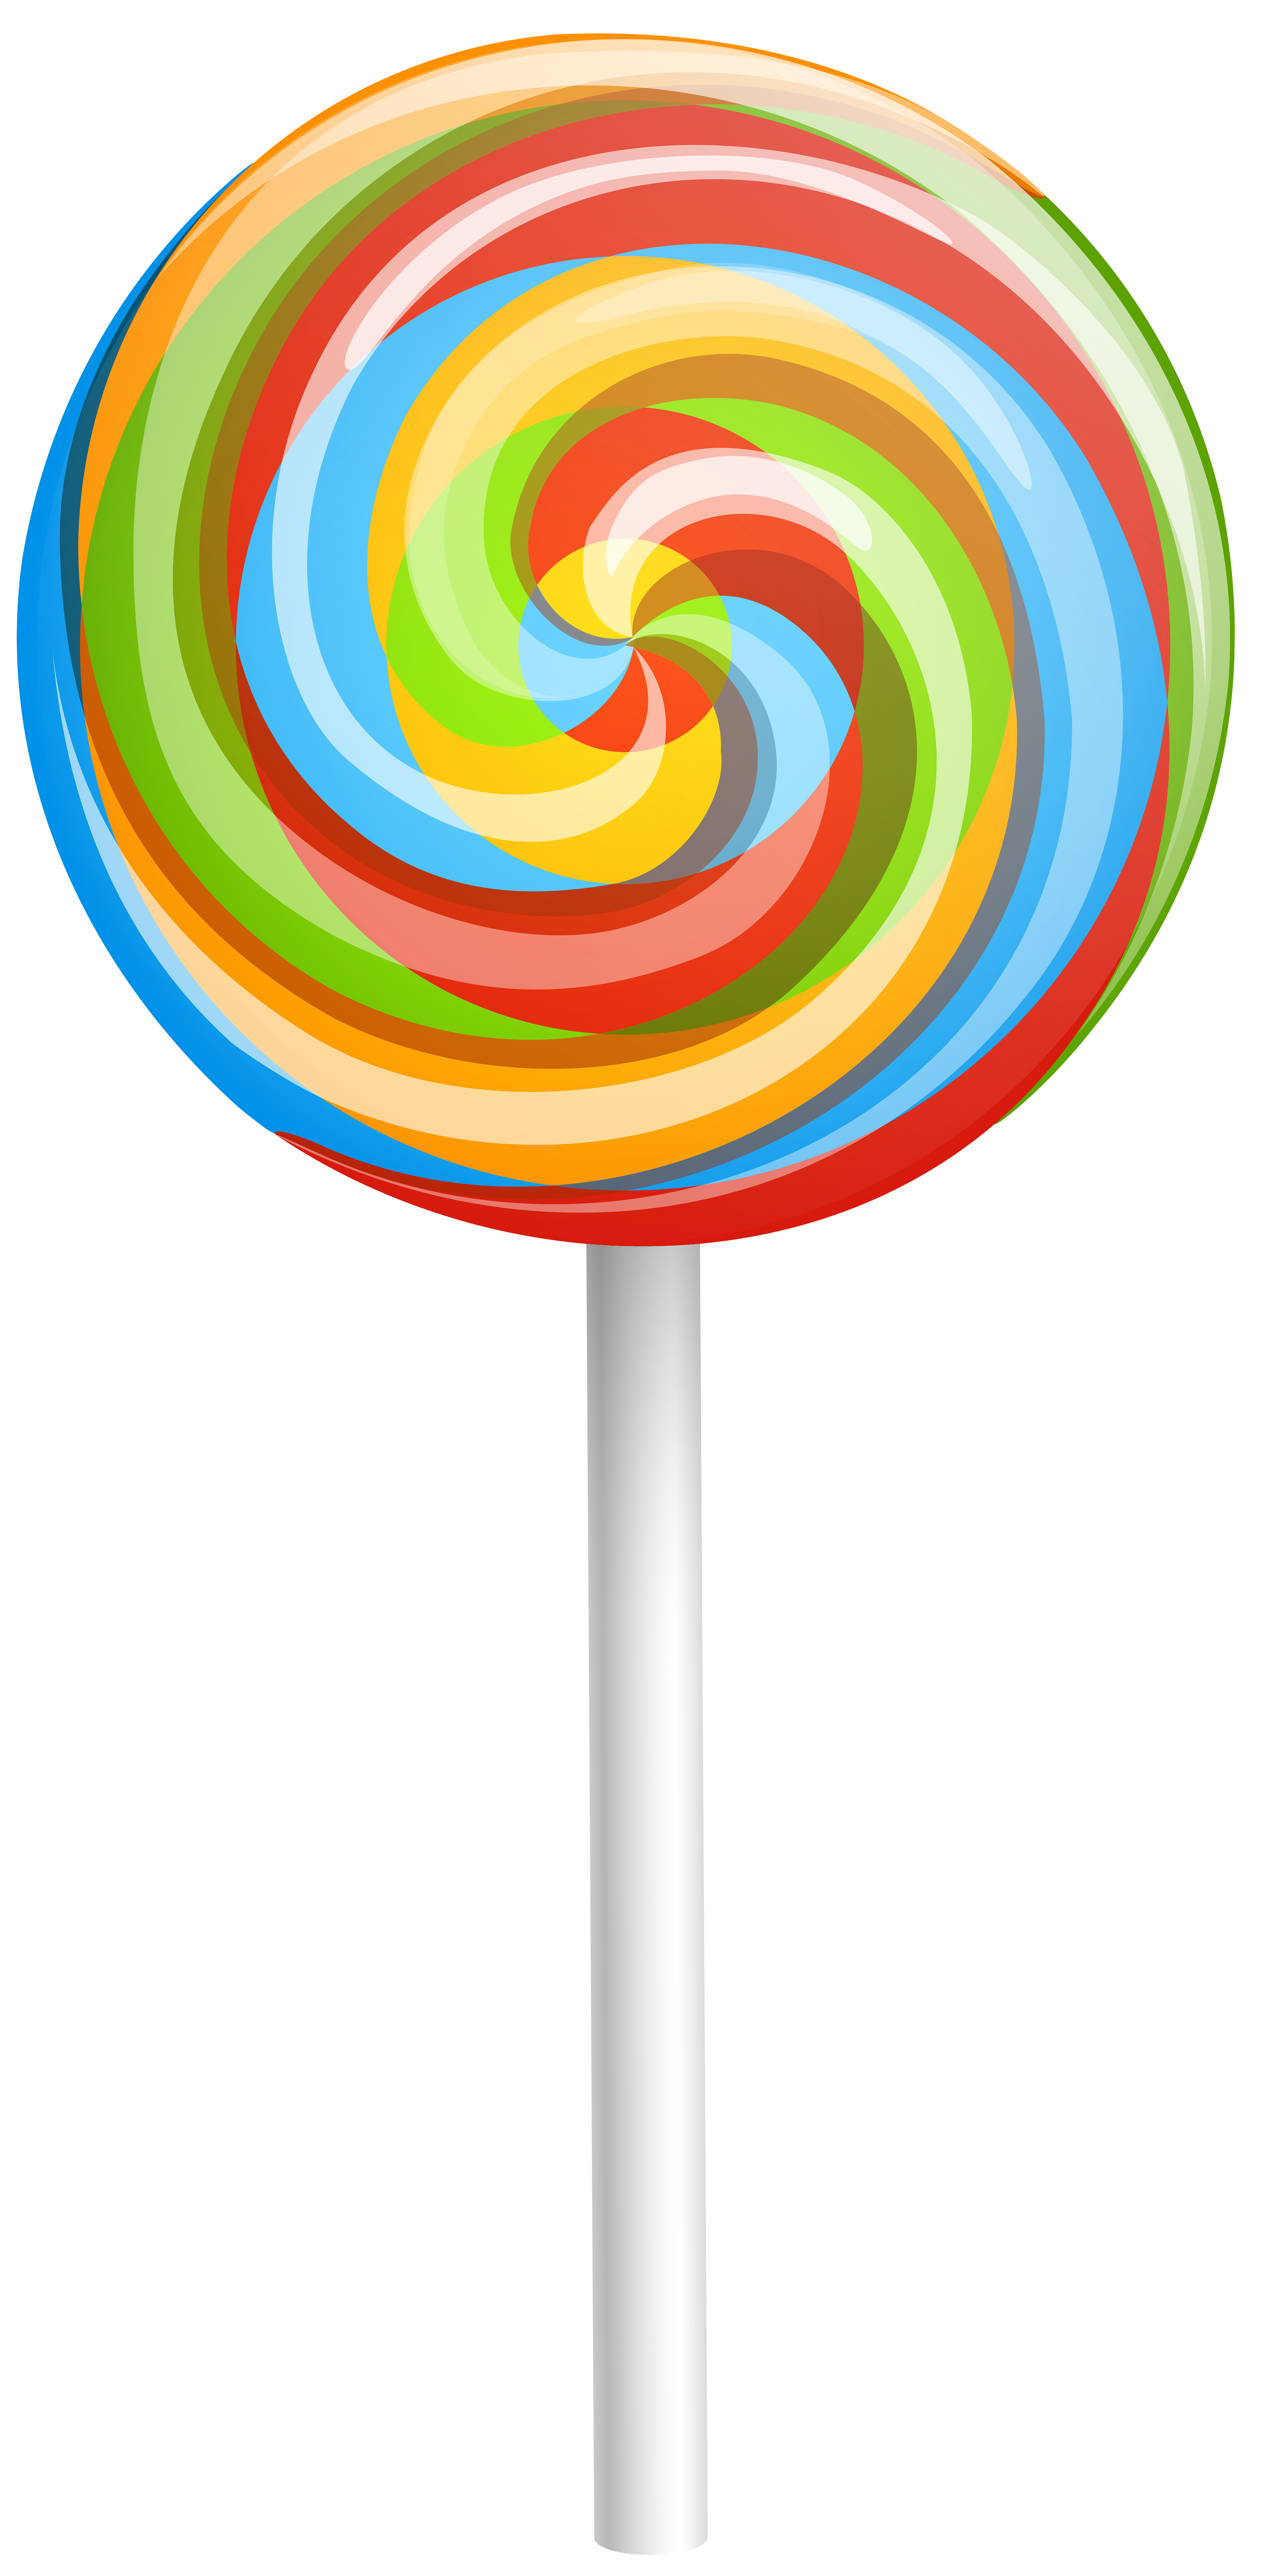 Rainbow Swirl Lollipop Image Hd Photo Clipart